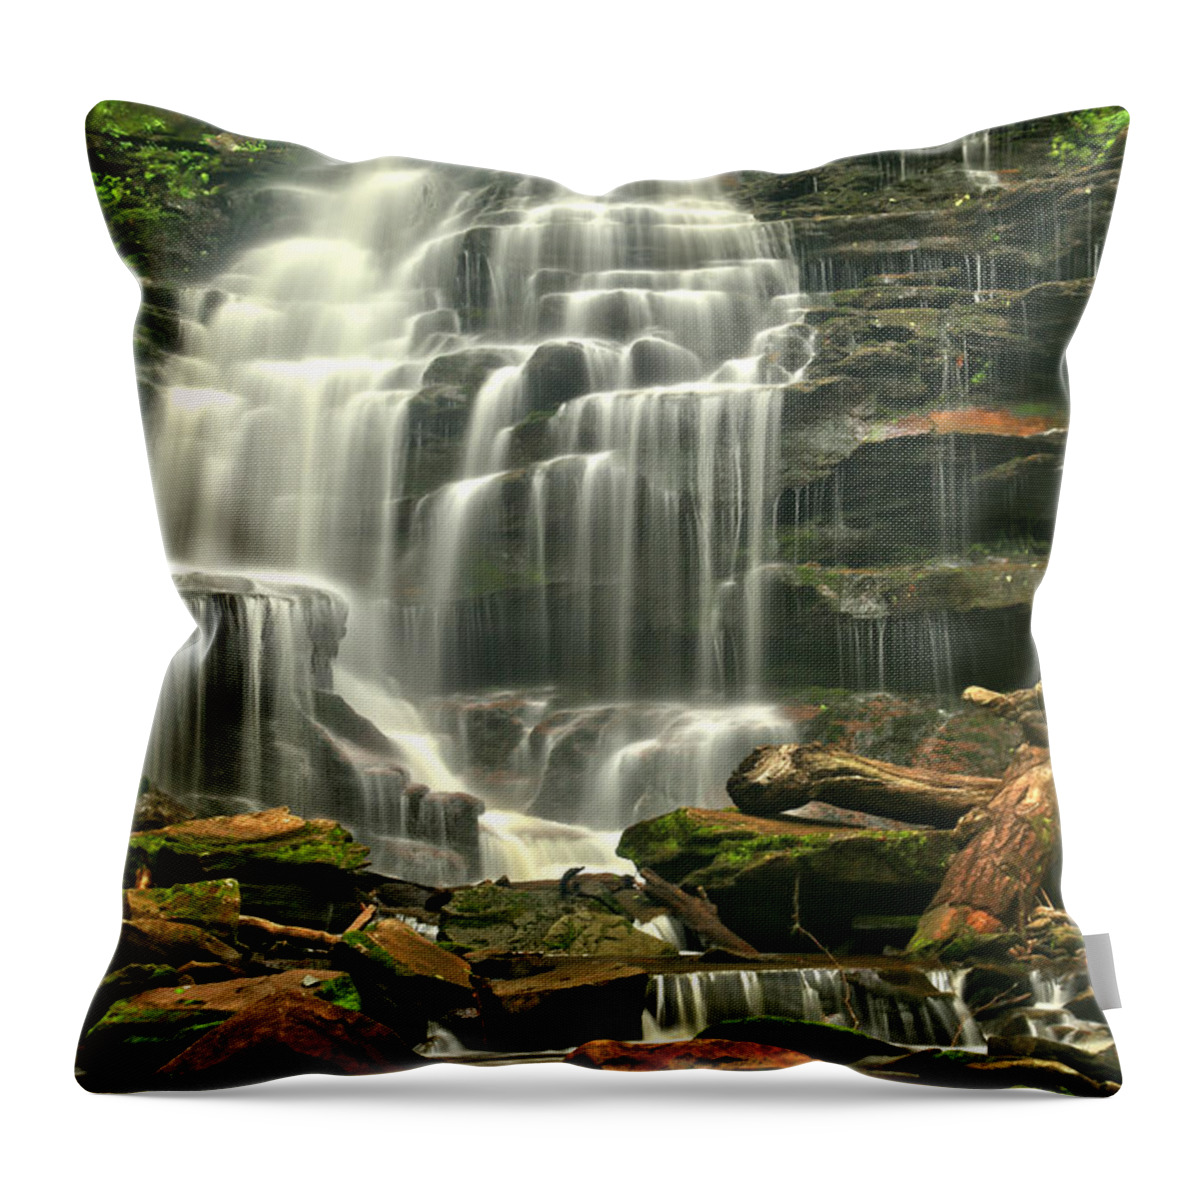 Erie Falls Throw Pillow featuring the photograph Erie Falls Gentle Cascades by Adam Jewell